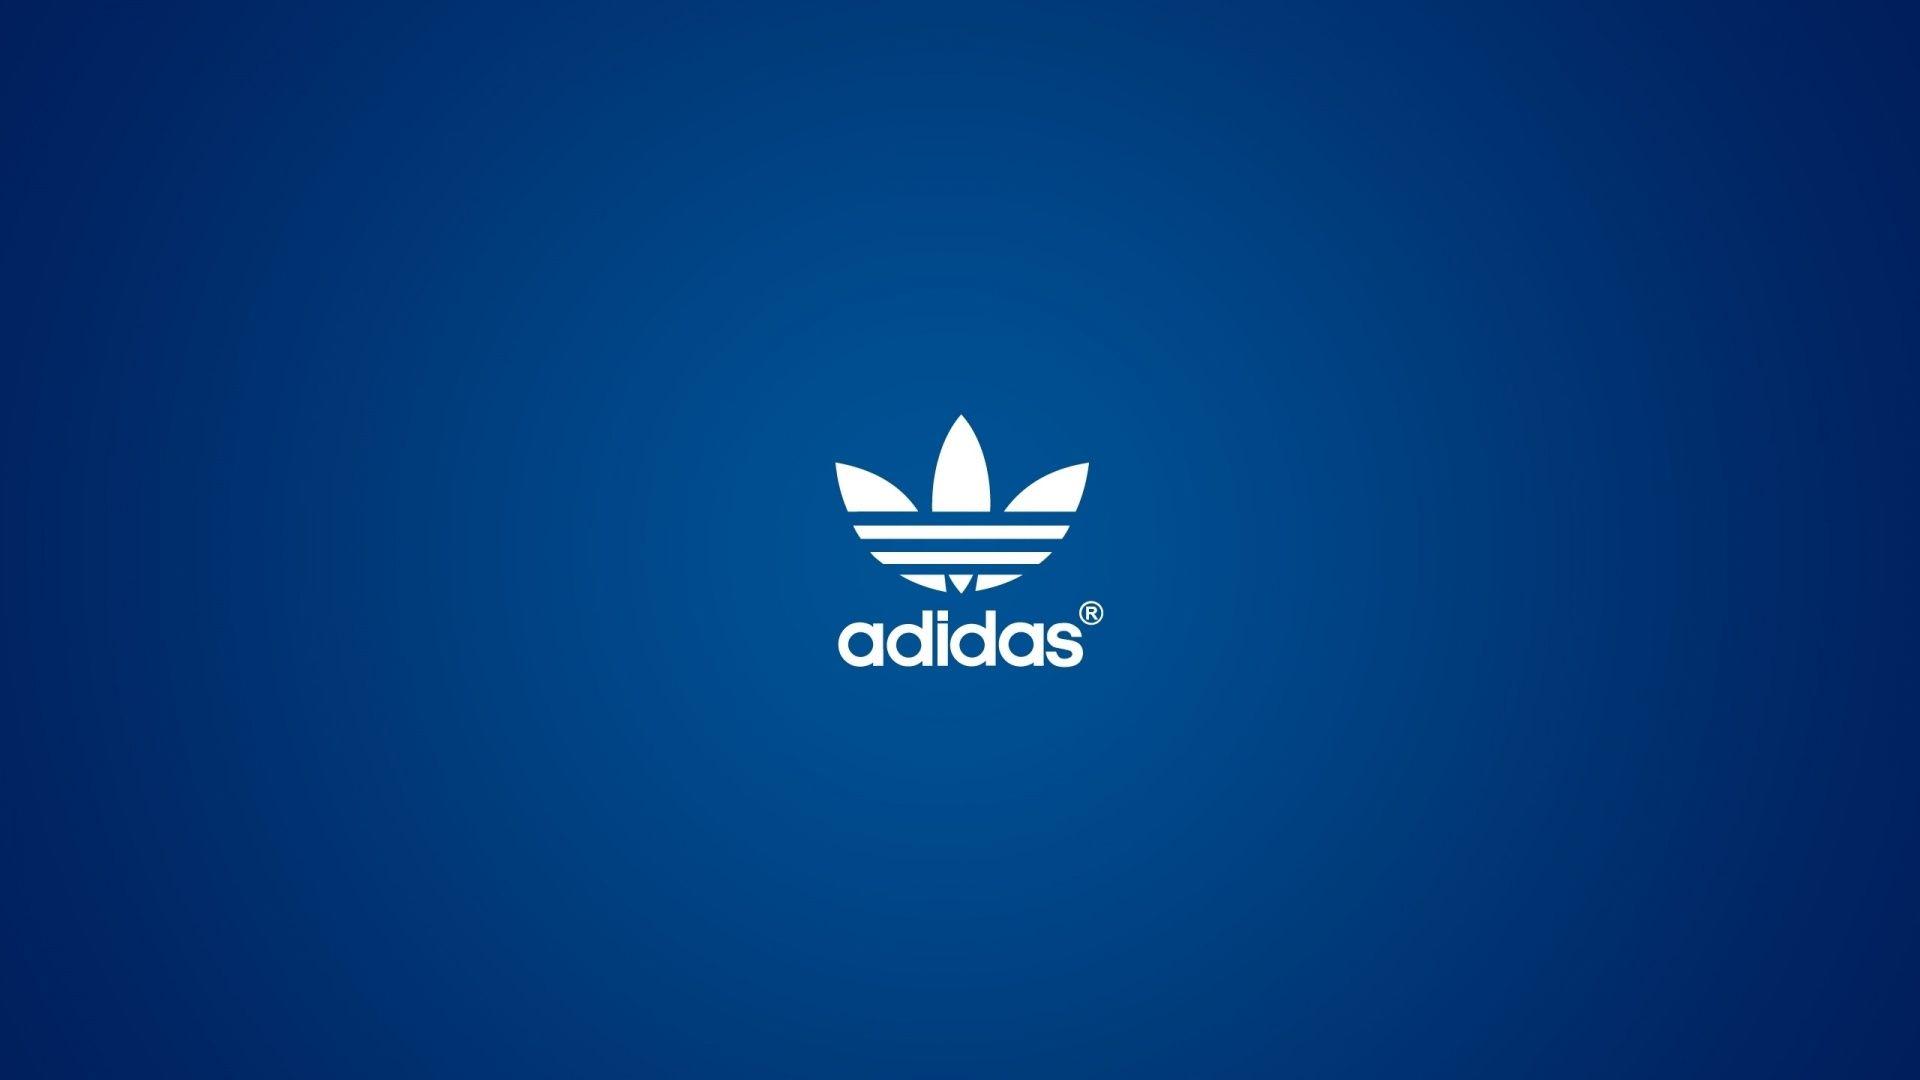 Blue and White Adidas Logo - Adidas x Logos